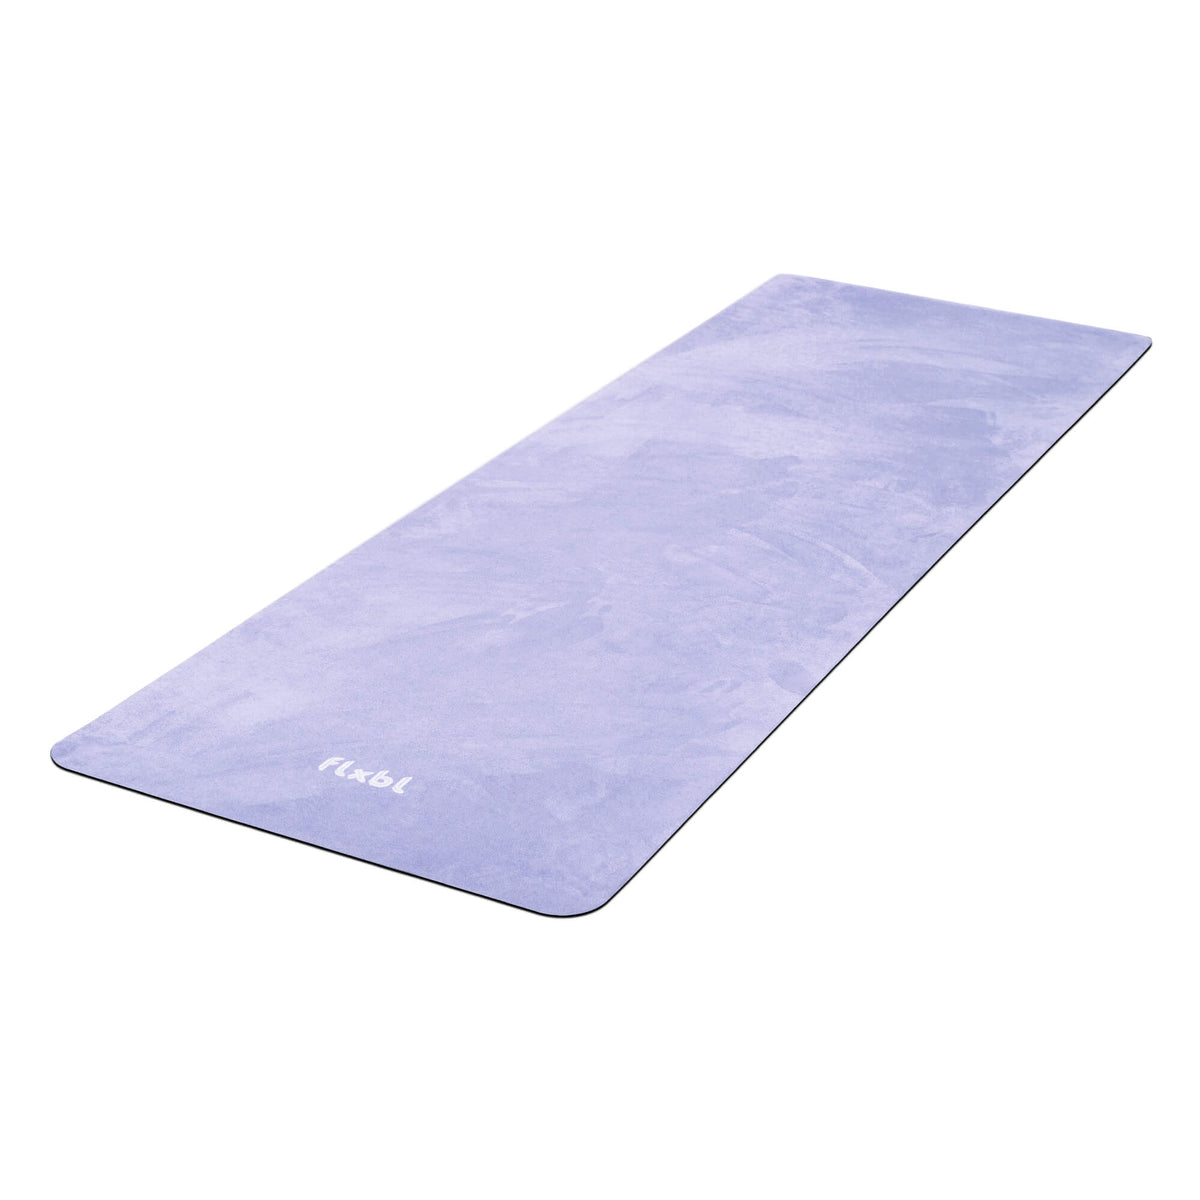 YOGA DESIGN LAB | Travel Yoga Mat | 2-in-1 Mat+Towel | Lightweight,  Foldable, Eco Luxury | Ideal for Hot Yoga, Bikram, Pilates, Barre, Sweat |  1.5mm